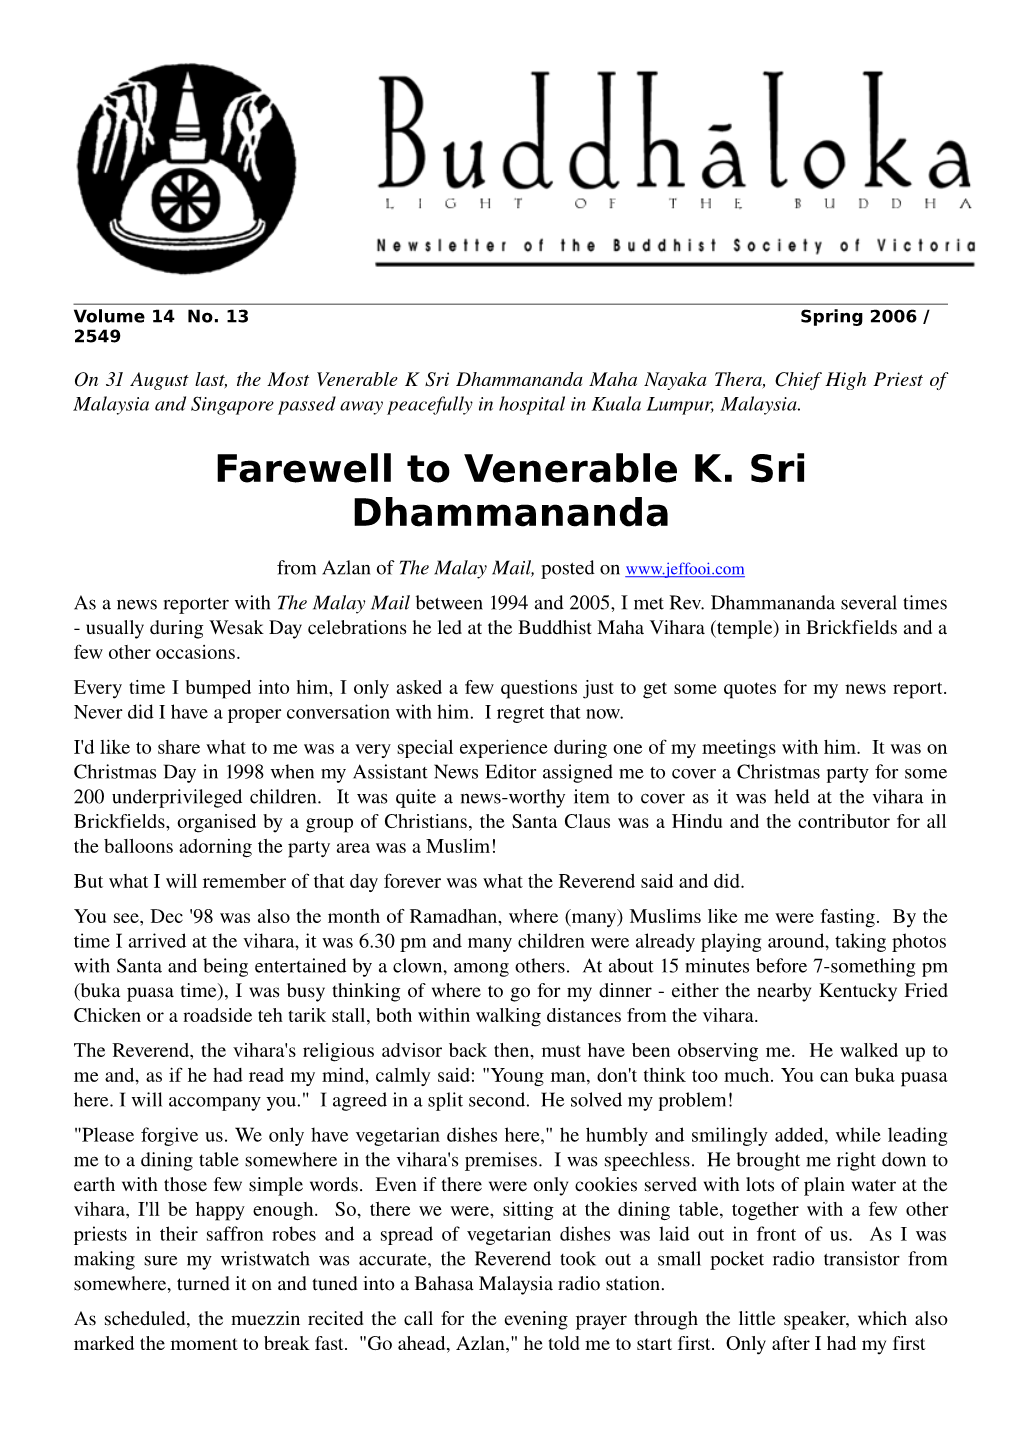 Farewell to Venerable K. Sri Dhammananda